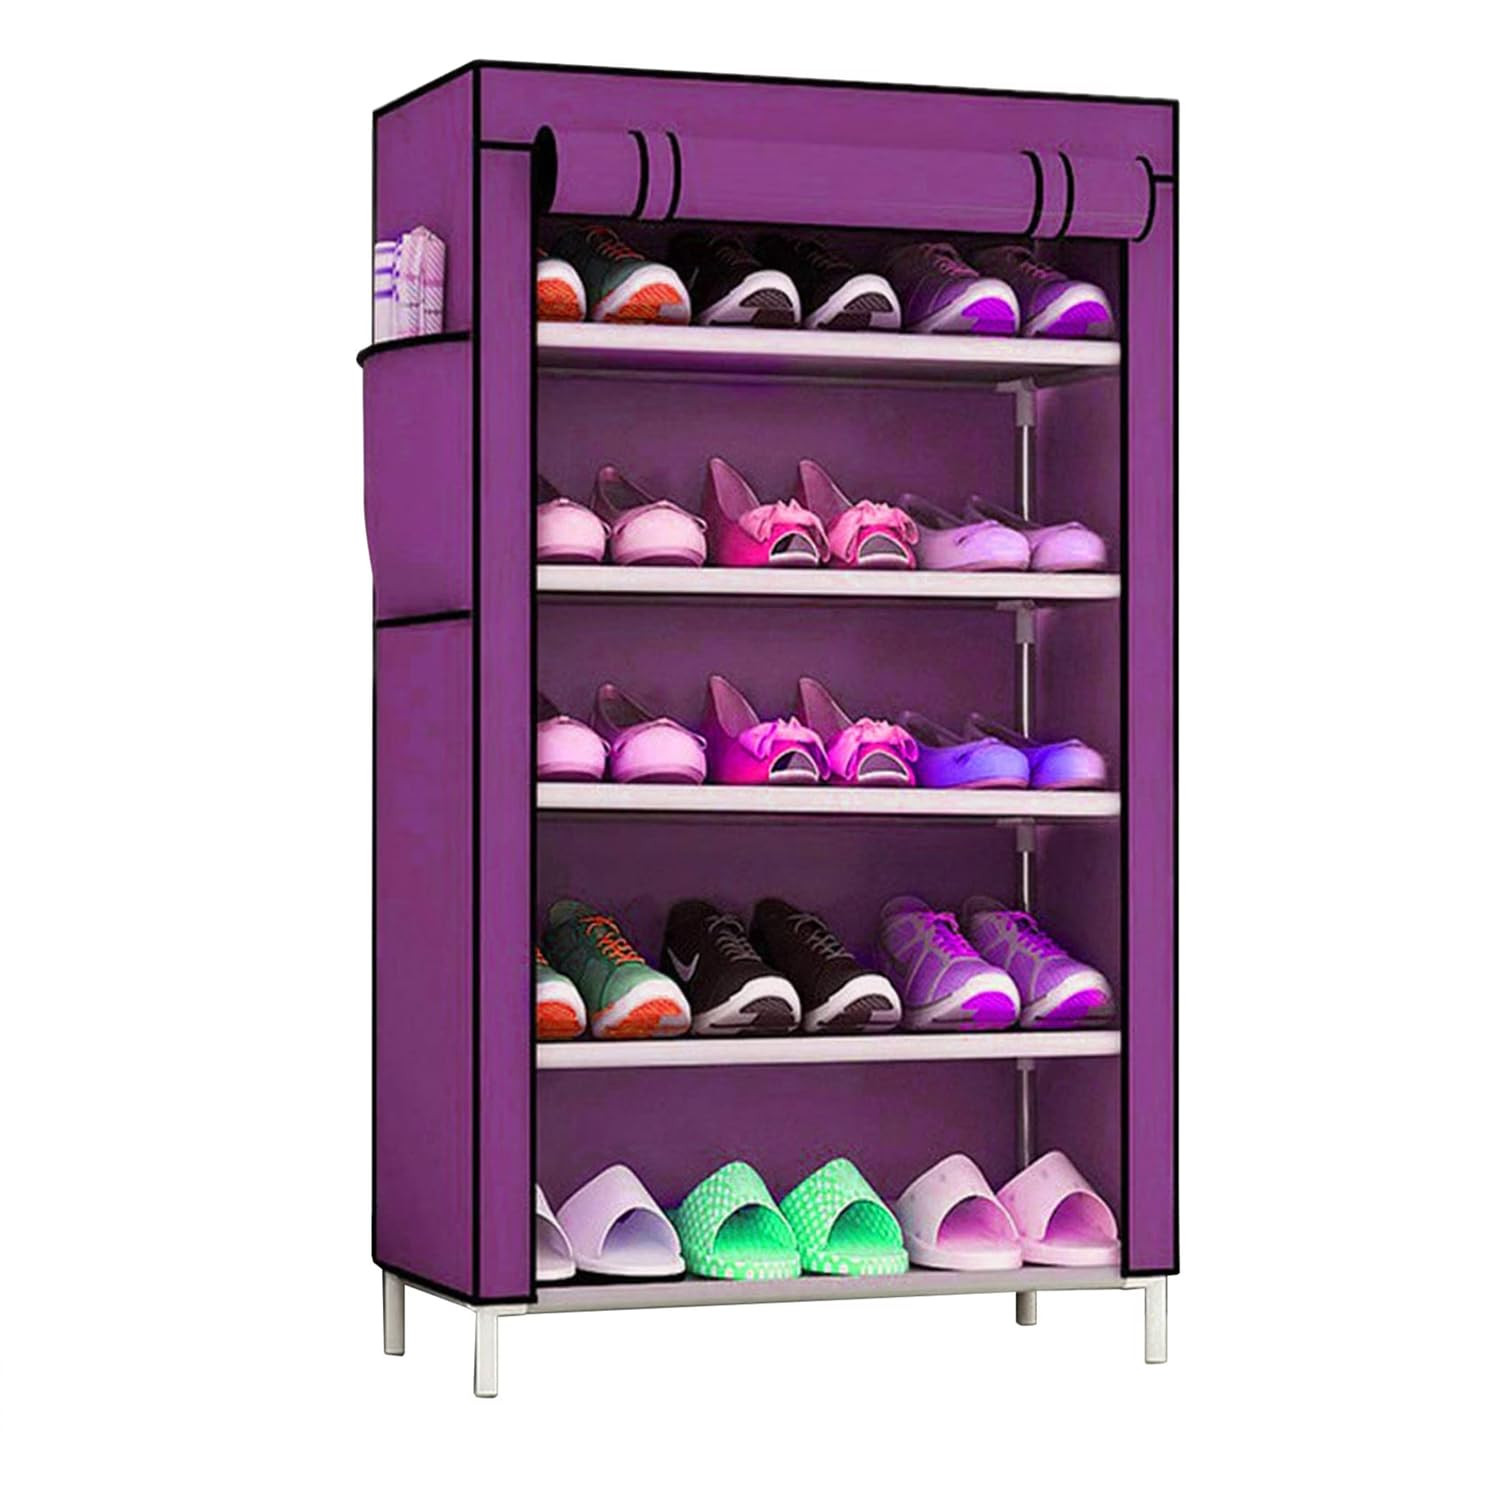 Kuber Industries Shoe Rack|Non-Woven 5 Shelves Shelf|Foldable Storage Rack Organizer for Shoe, Books (Purple)